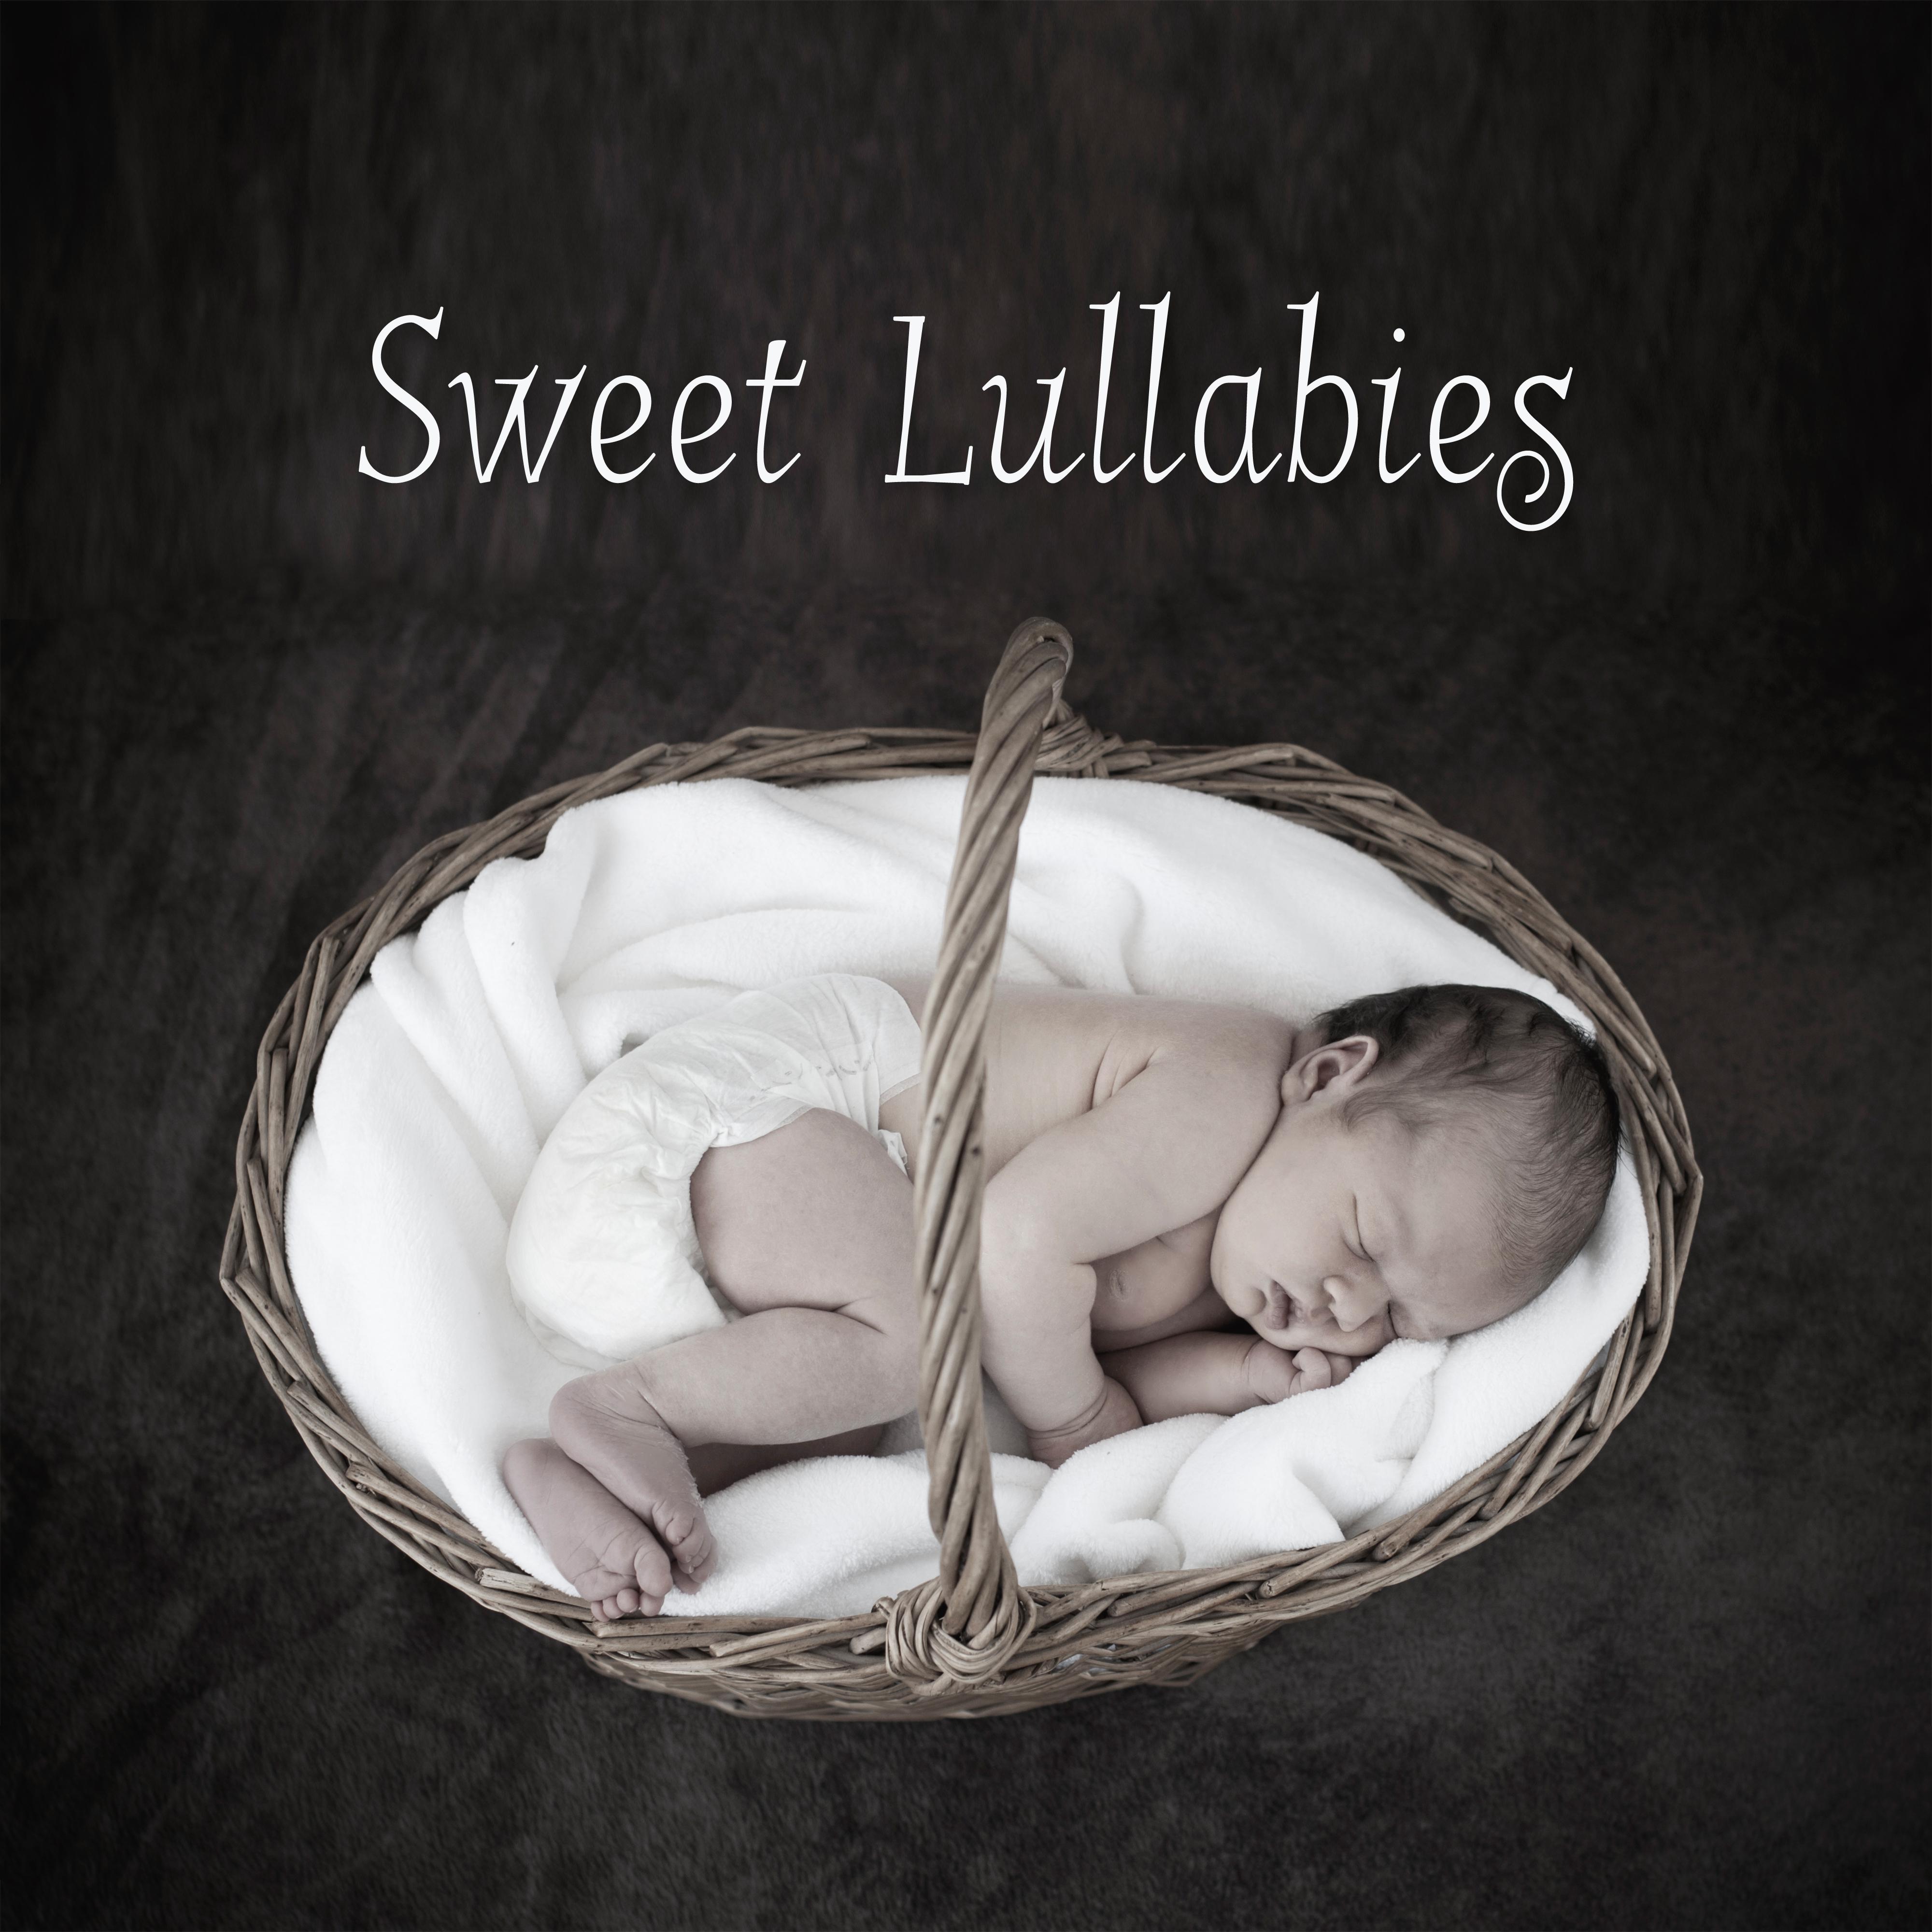 Sweet Lullabies  Classical Music for Babies, Lullabies Songs 2017, Good Night